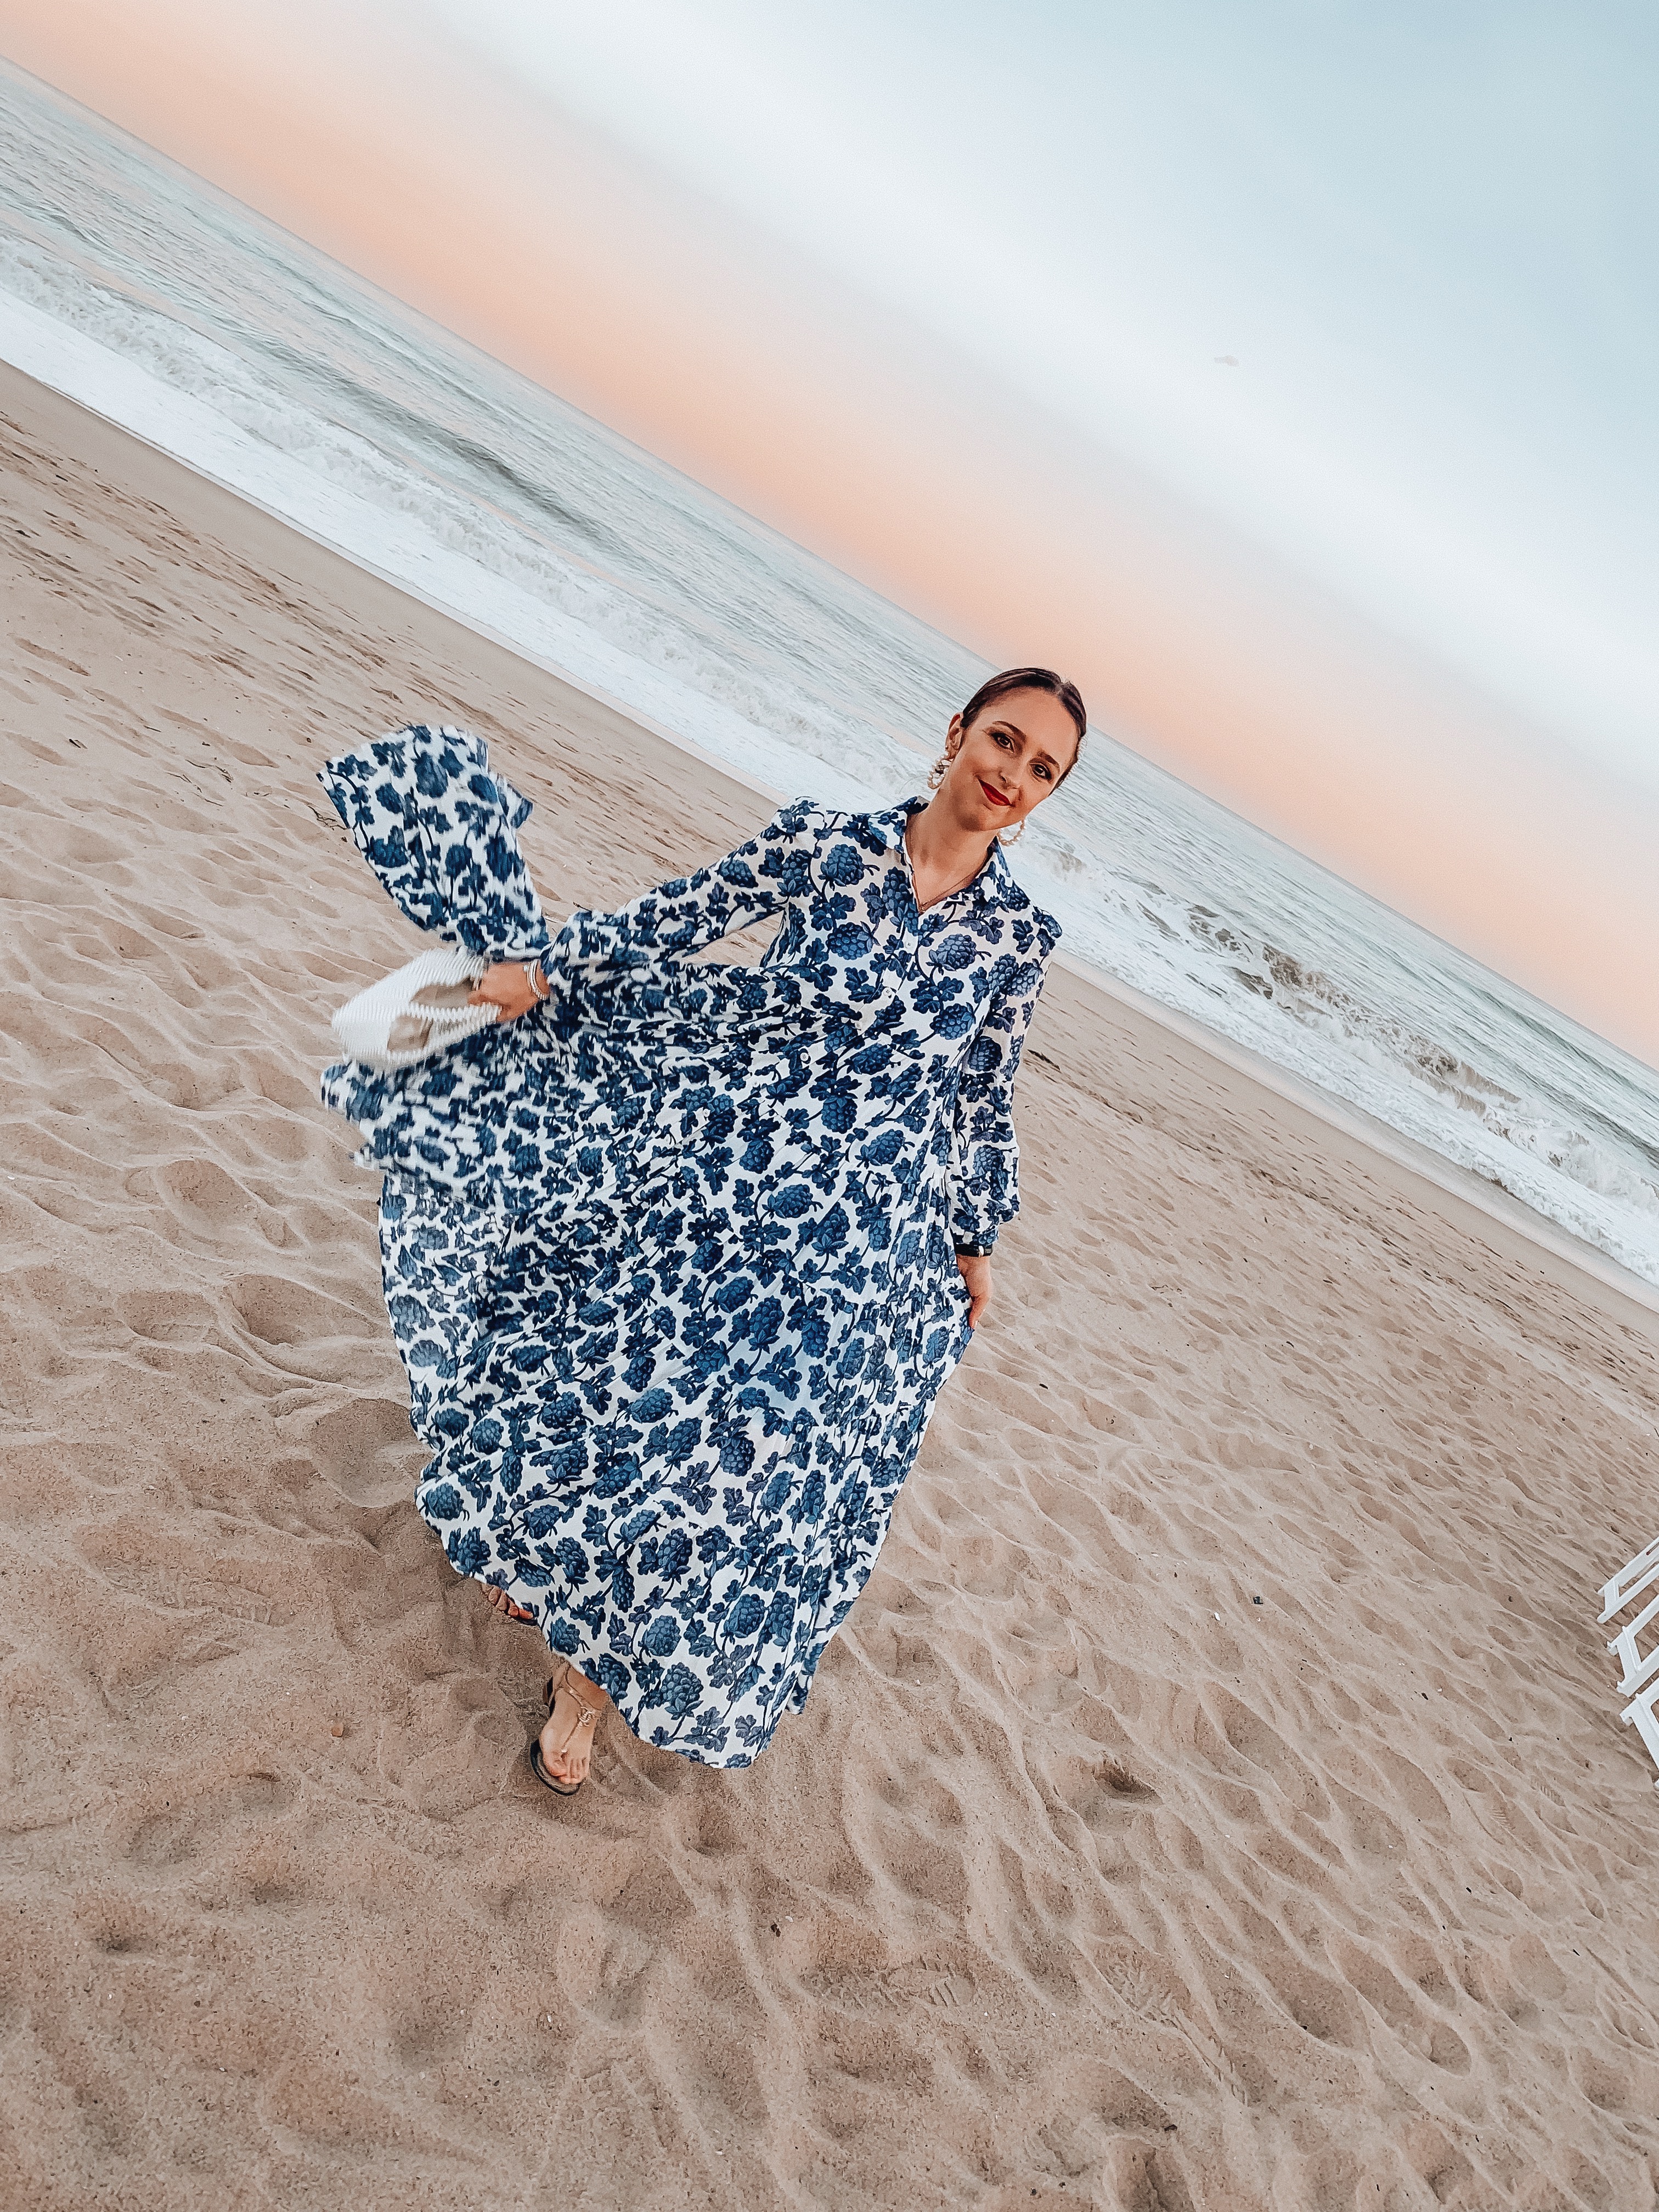 Gone to Gurney's Montauk Resort & Seawater Spa - Should you go?- Blogger-Hotel-Review-Gurneys-Wedding Guest Dress-Beach-Summer #montauk #beach #bikini #Blogger #simplybysimone #review